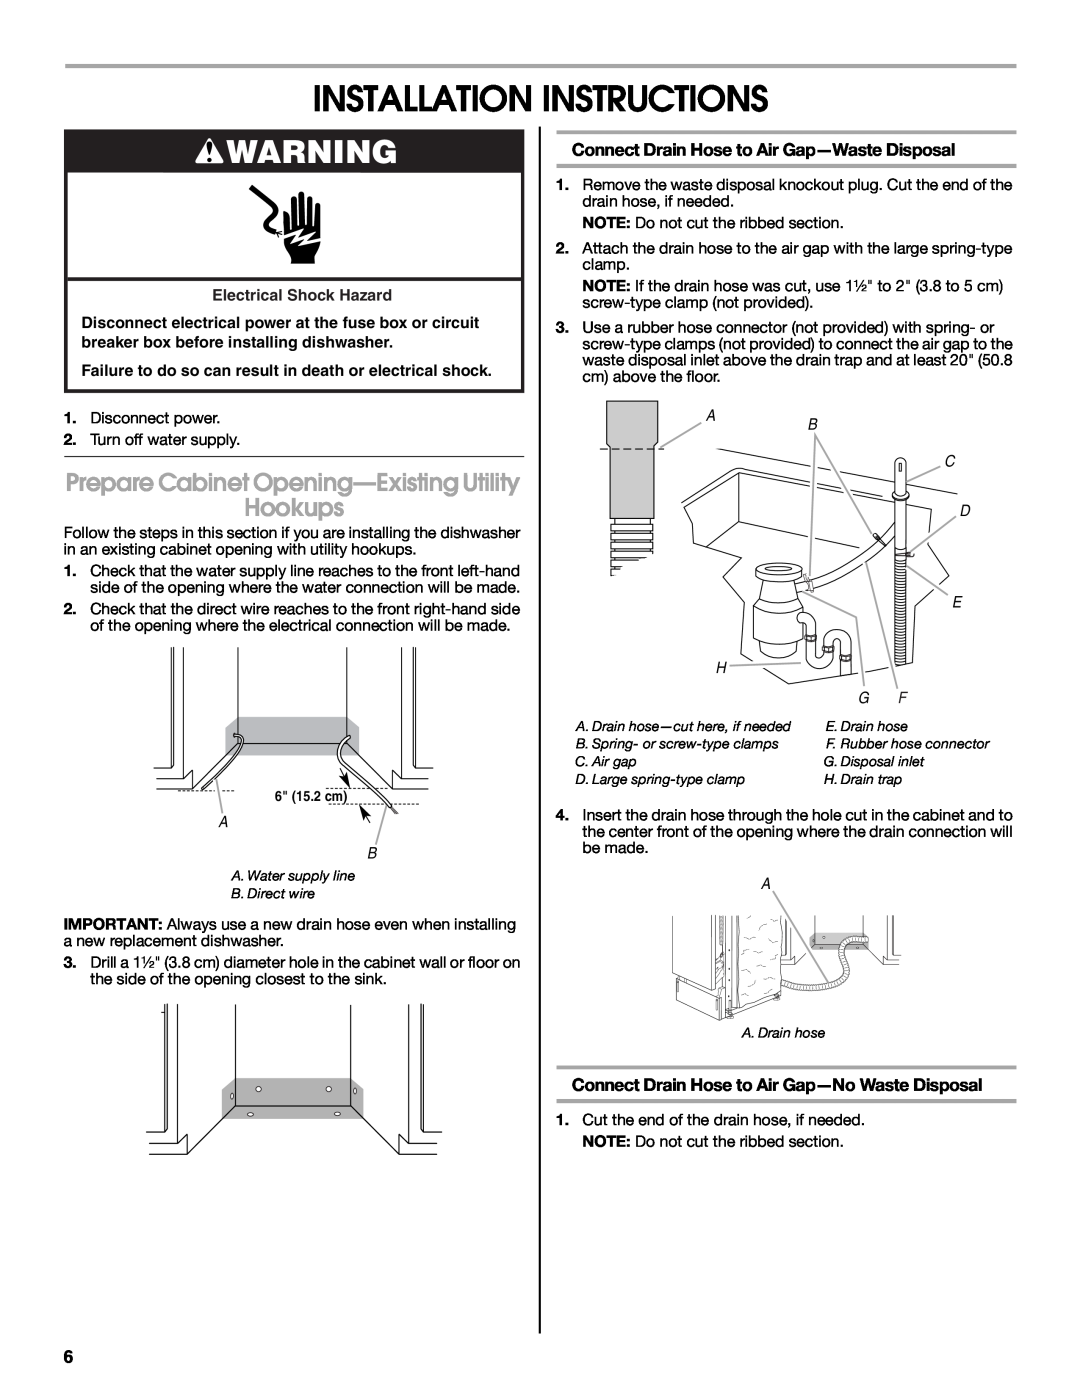 Whirlpool GU3100XTVS Installation Instructions, Prepare Cabinet Opening-Existing Utility Hookups, Electrical Shock Hazard 